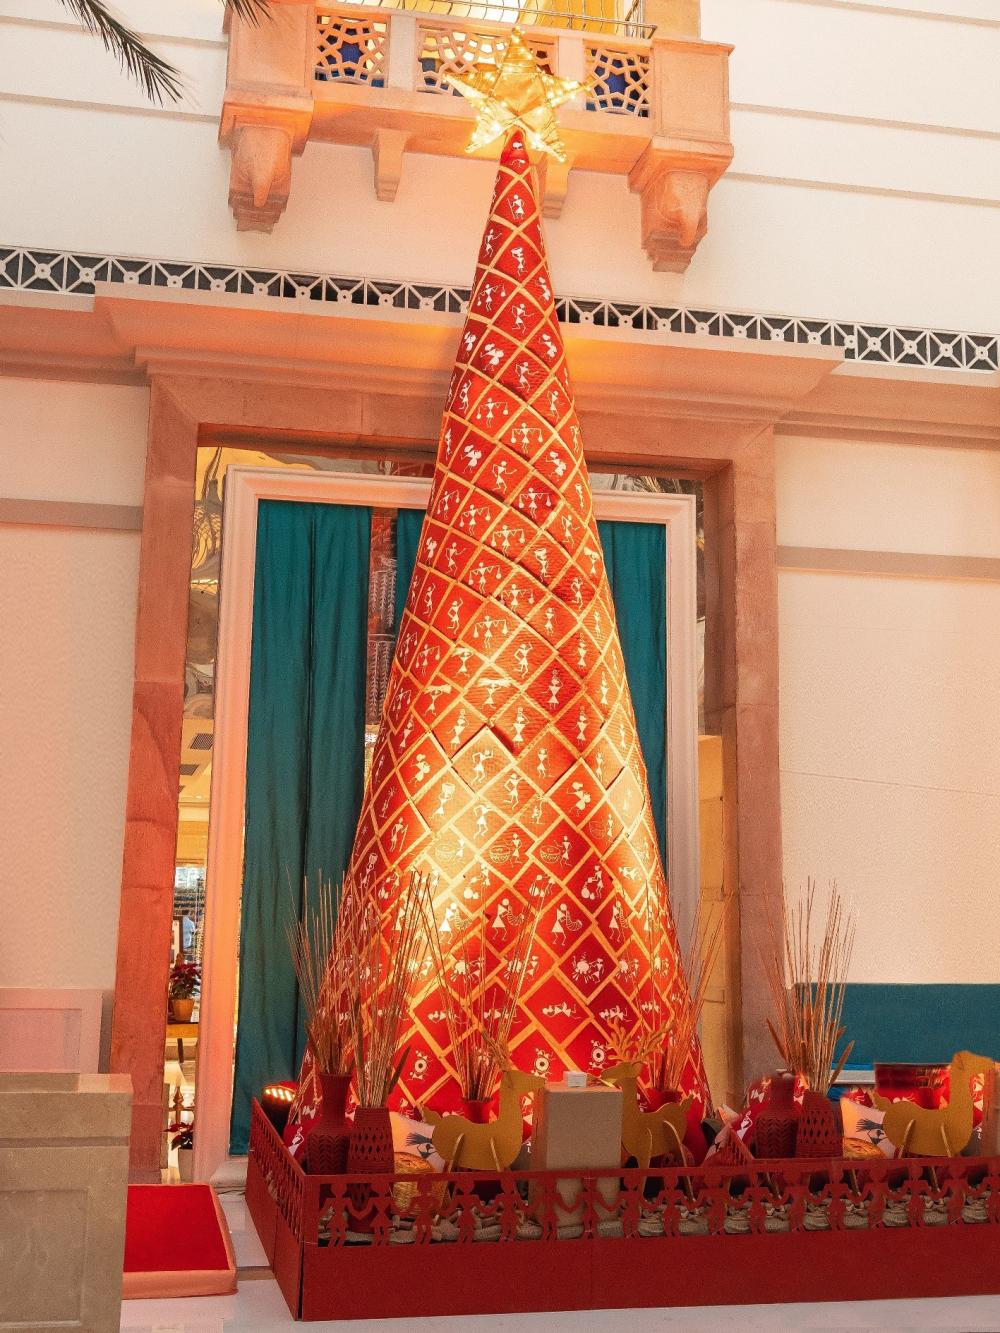 The Weekend Leader - ITC Maratha installs eco-friendly Christmas tree